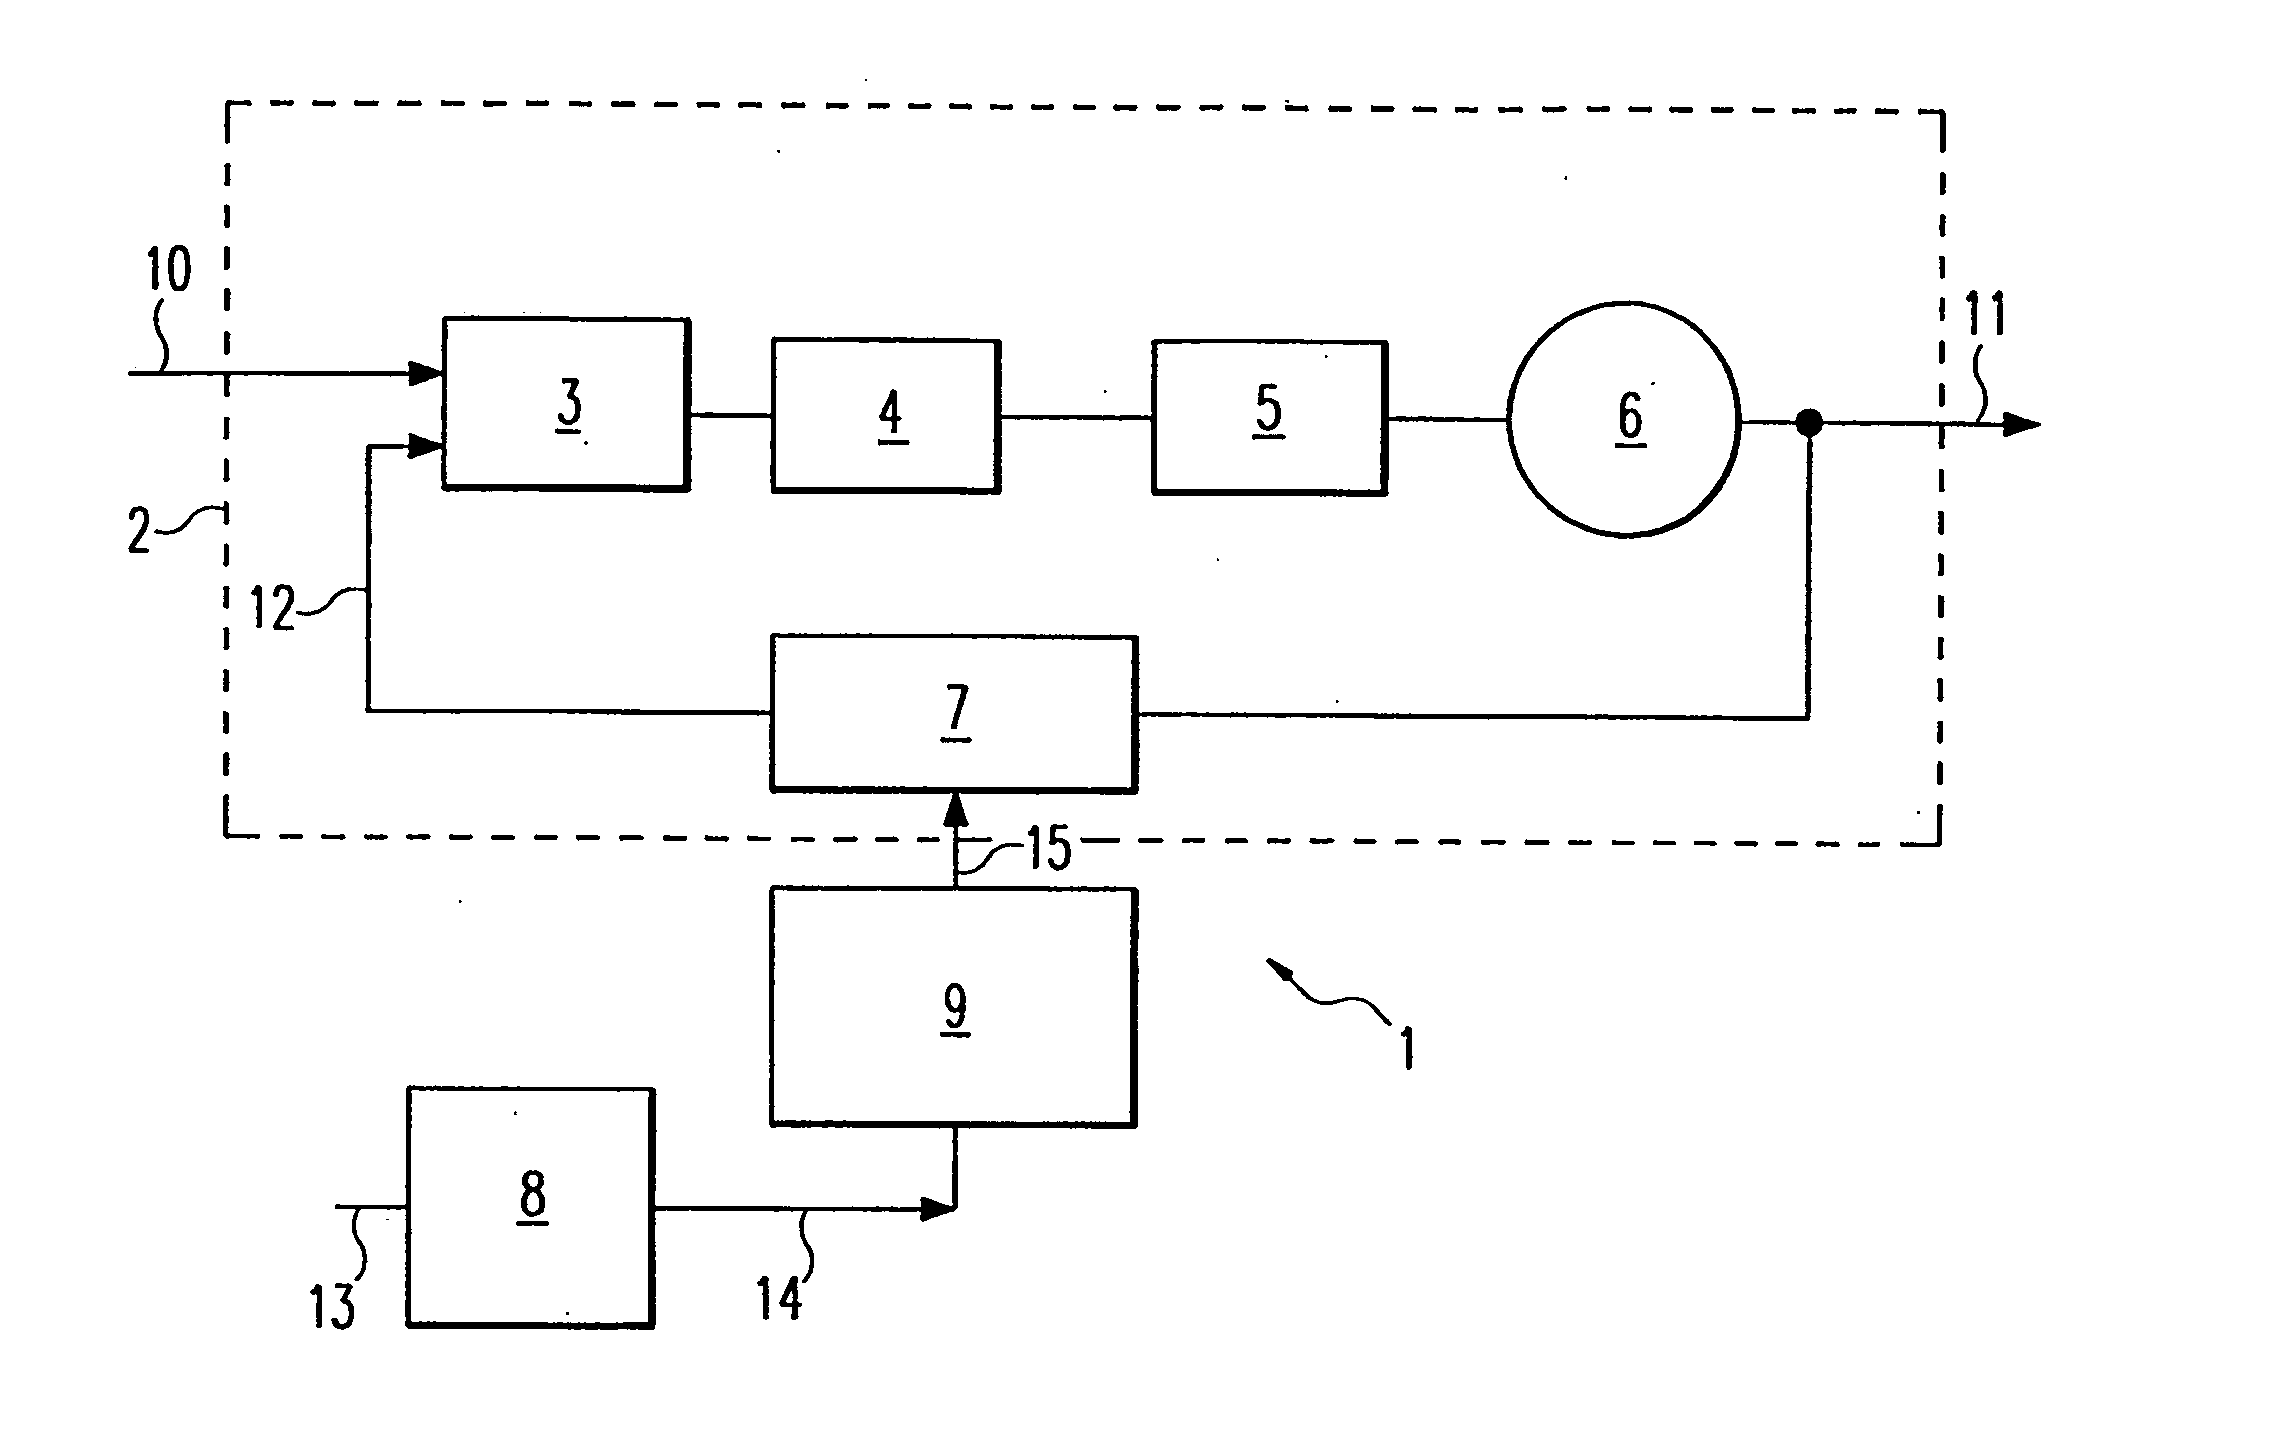 Single point modulator having a PLL circuit